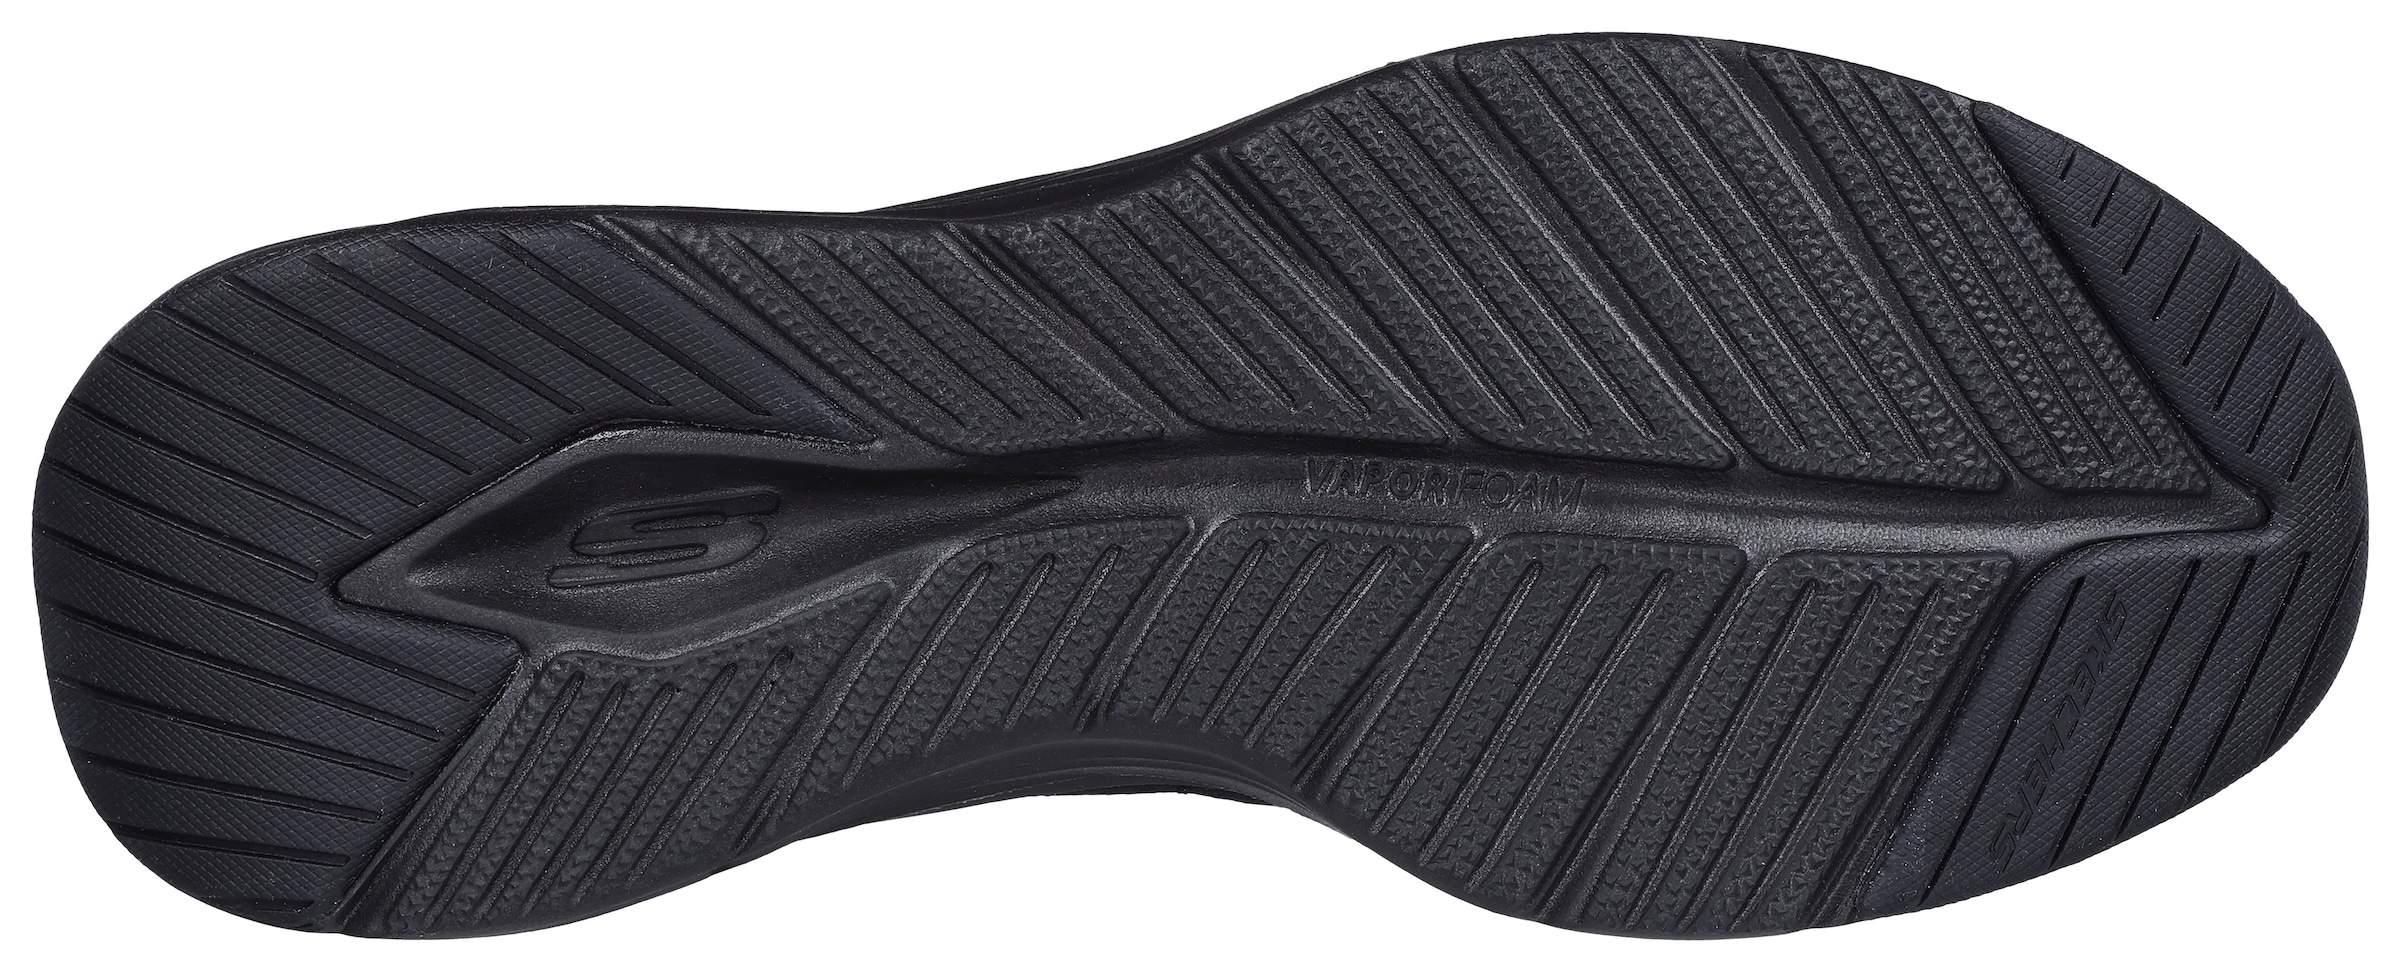 Skechers Slip-On Sneaker »VAPOR FOAM-COVERT«, Slipper, Trainingsschuh, Freizeitschuh im monochromen Design